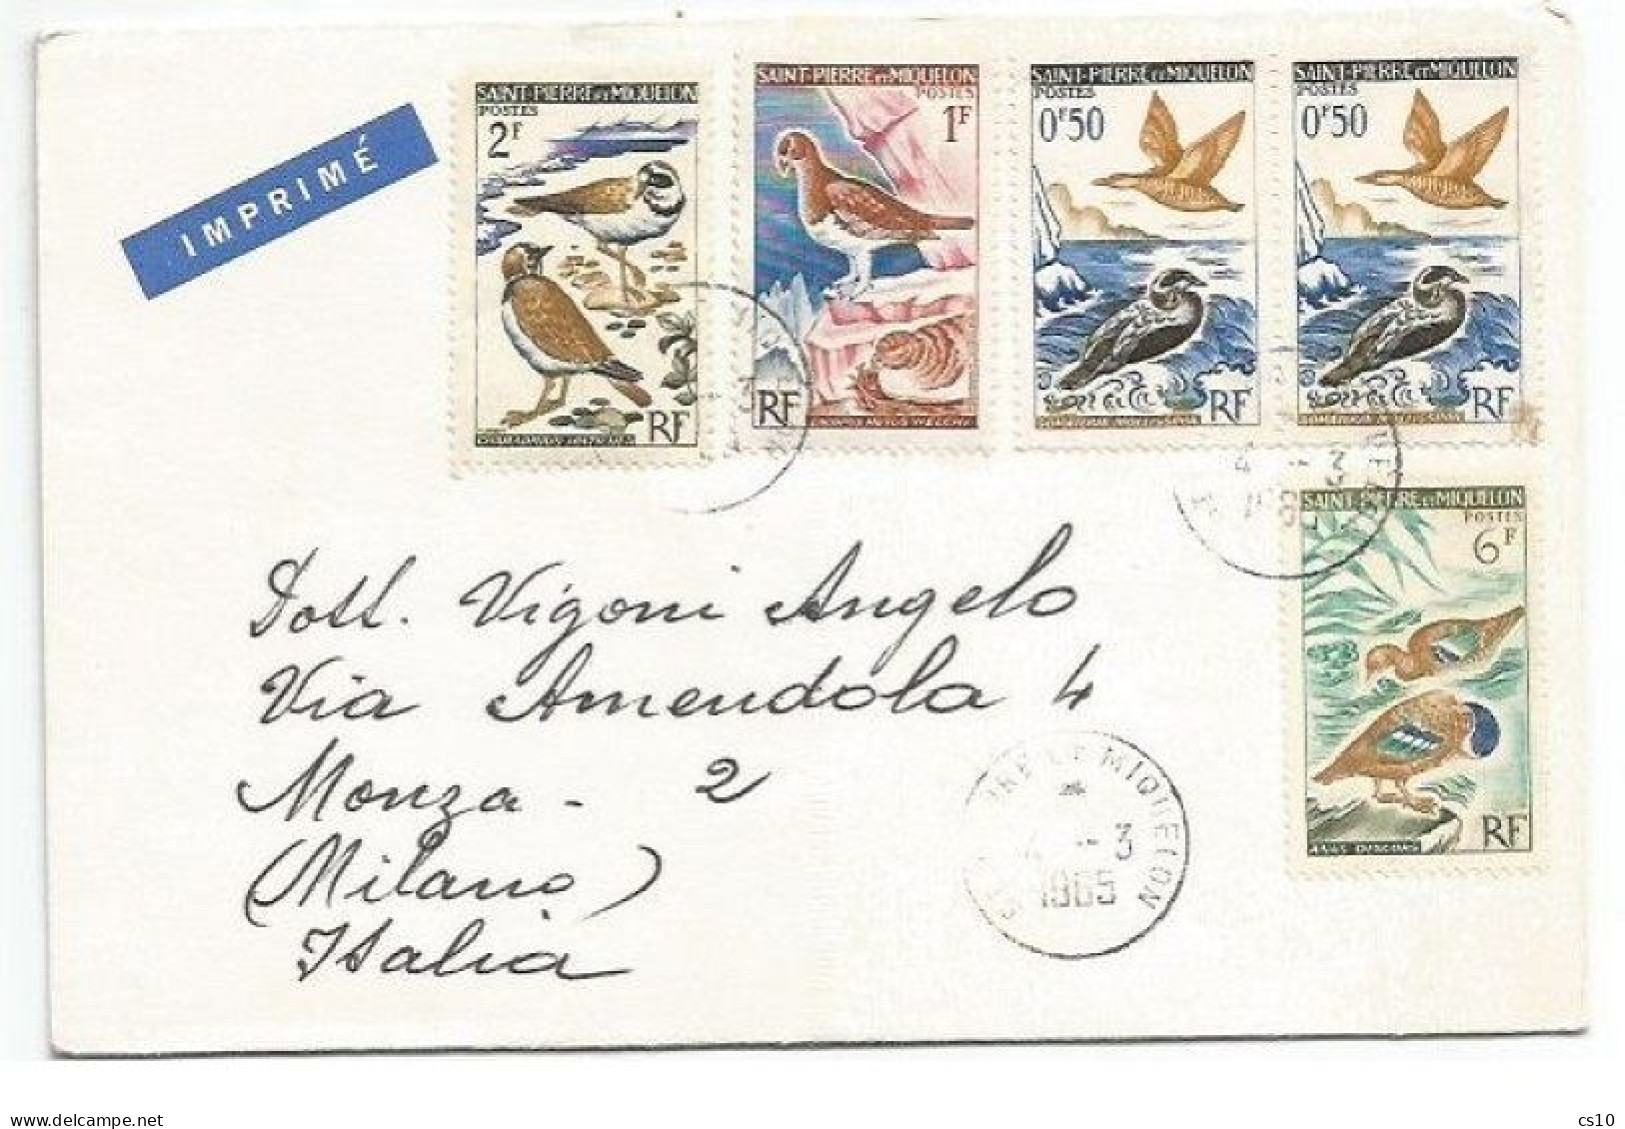 Saint Pierre Miquelon Imprimé Abbott Eritromicina Dear Doctor 4mar1965 X Italie - Advertising